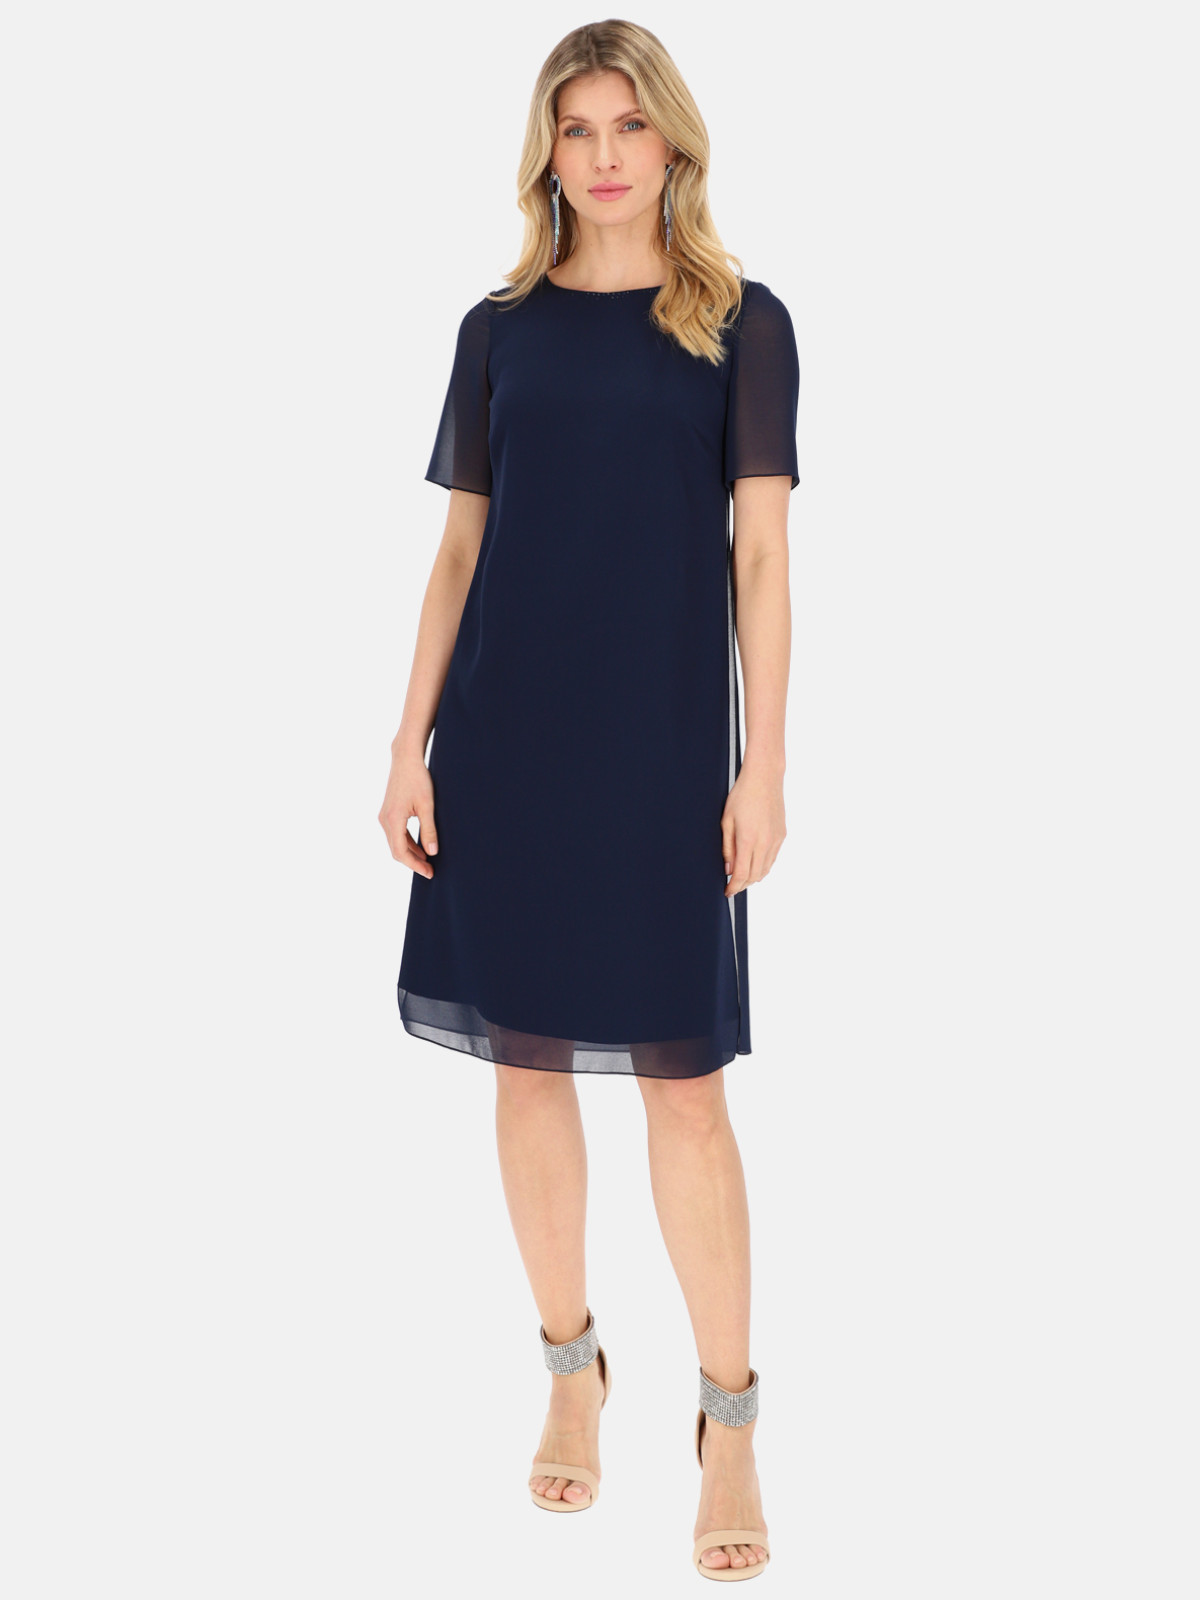 Potis & Verso Woman's Dress Datura_1 Navy Blue